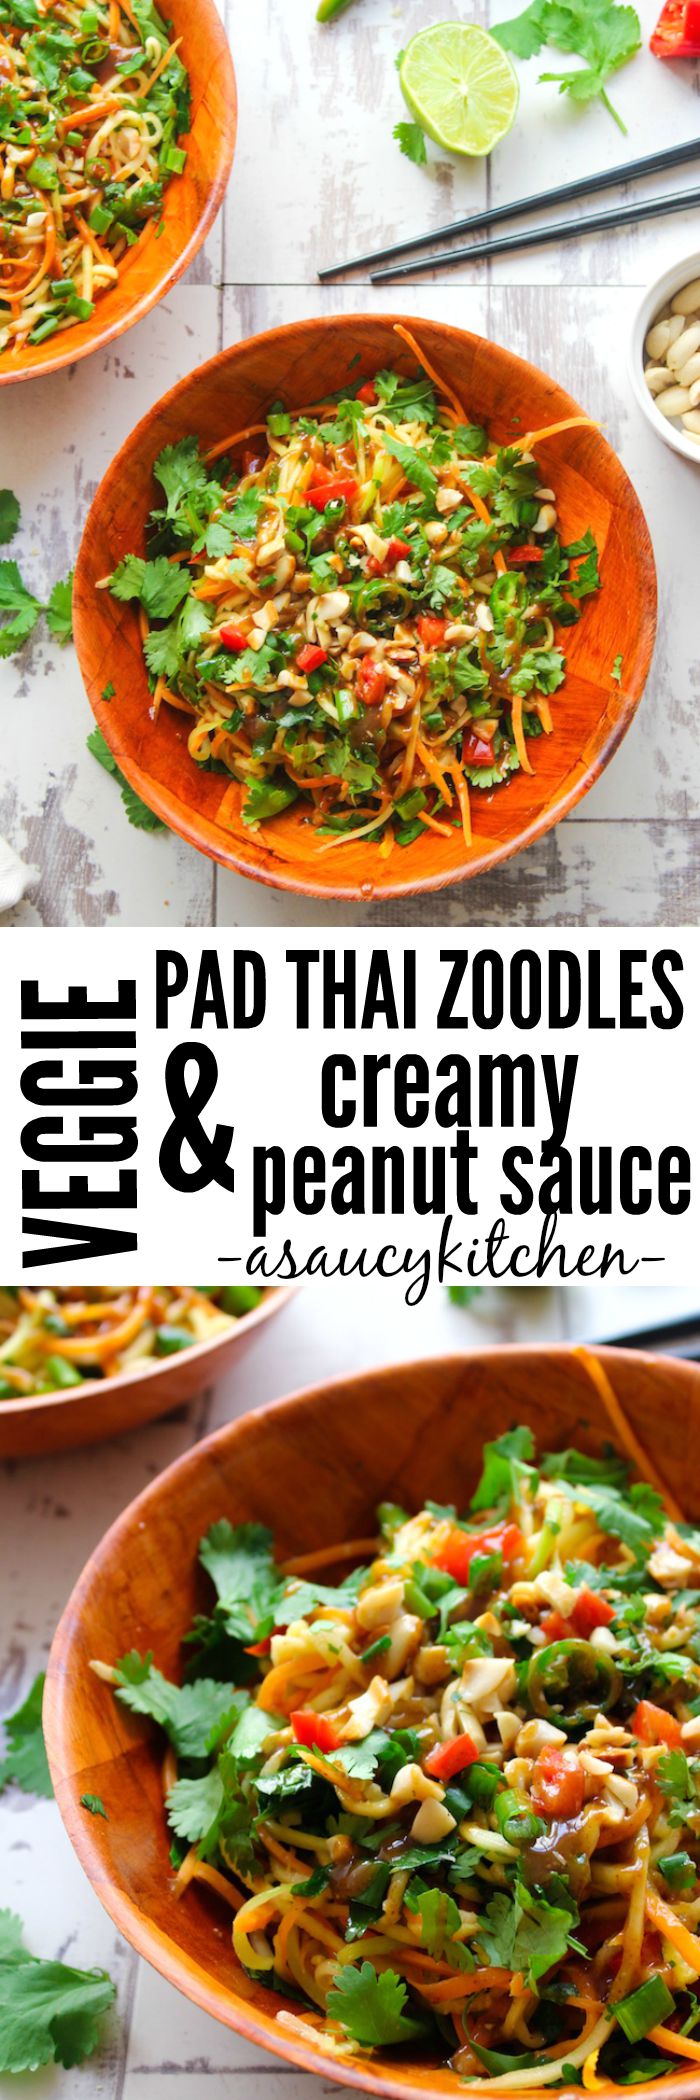 Veggie Pad Thai Zoodles & Peanut Sauce www.asaucykitchen.com